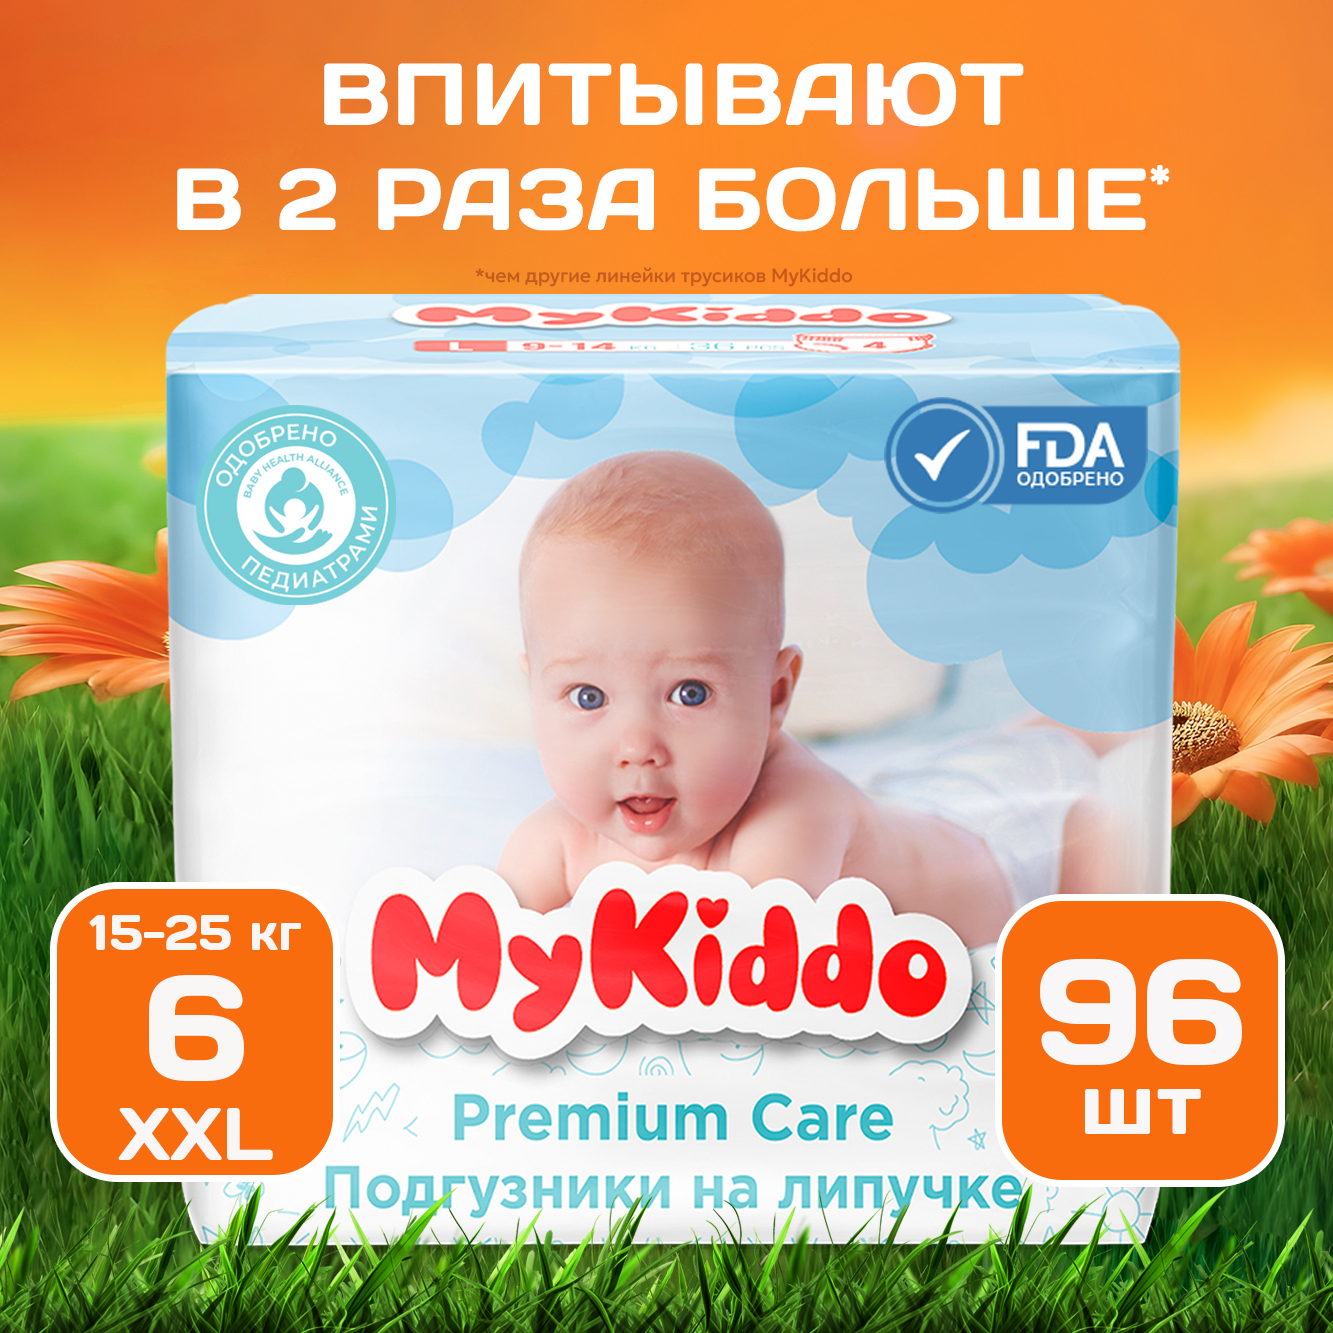 Подгузники-трусики для детей MyKiddo Premium XXL (15-25 кг) 96 шт. 3 уп. x 32 шт. трусики для детей bella baby happy midi по 48 шт